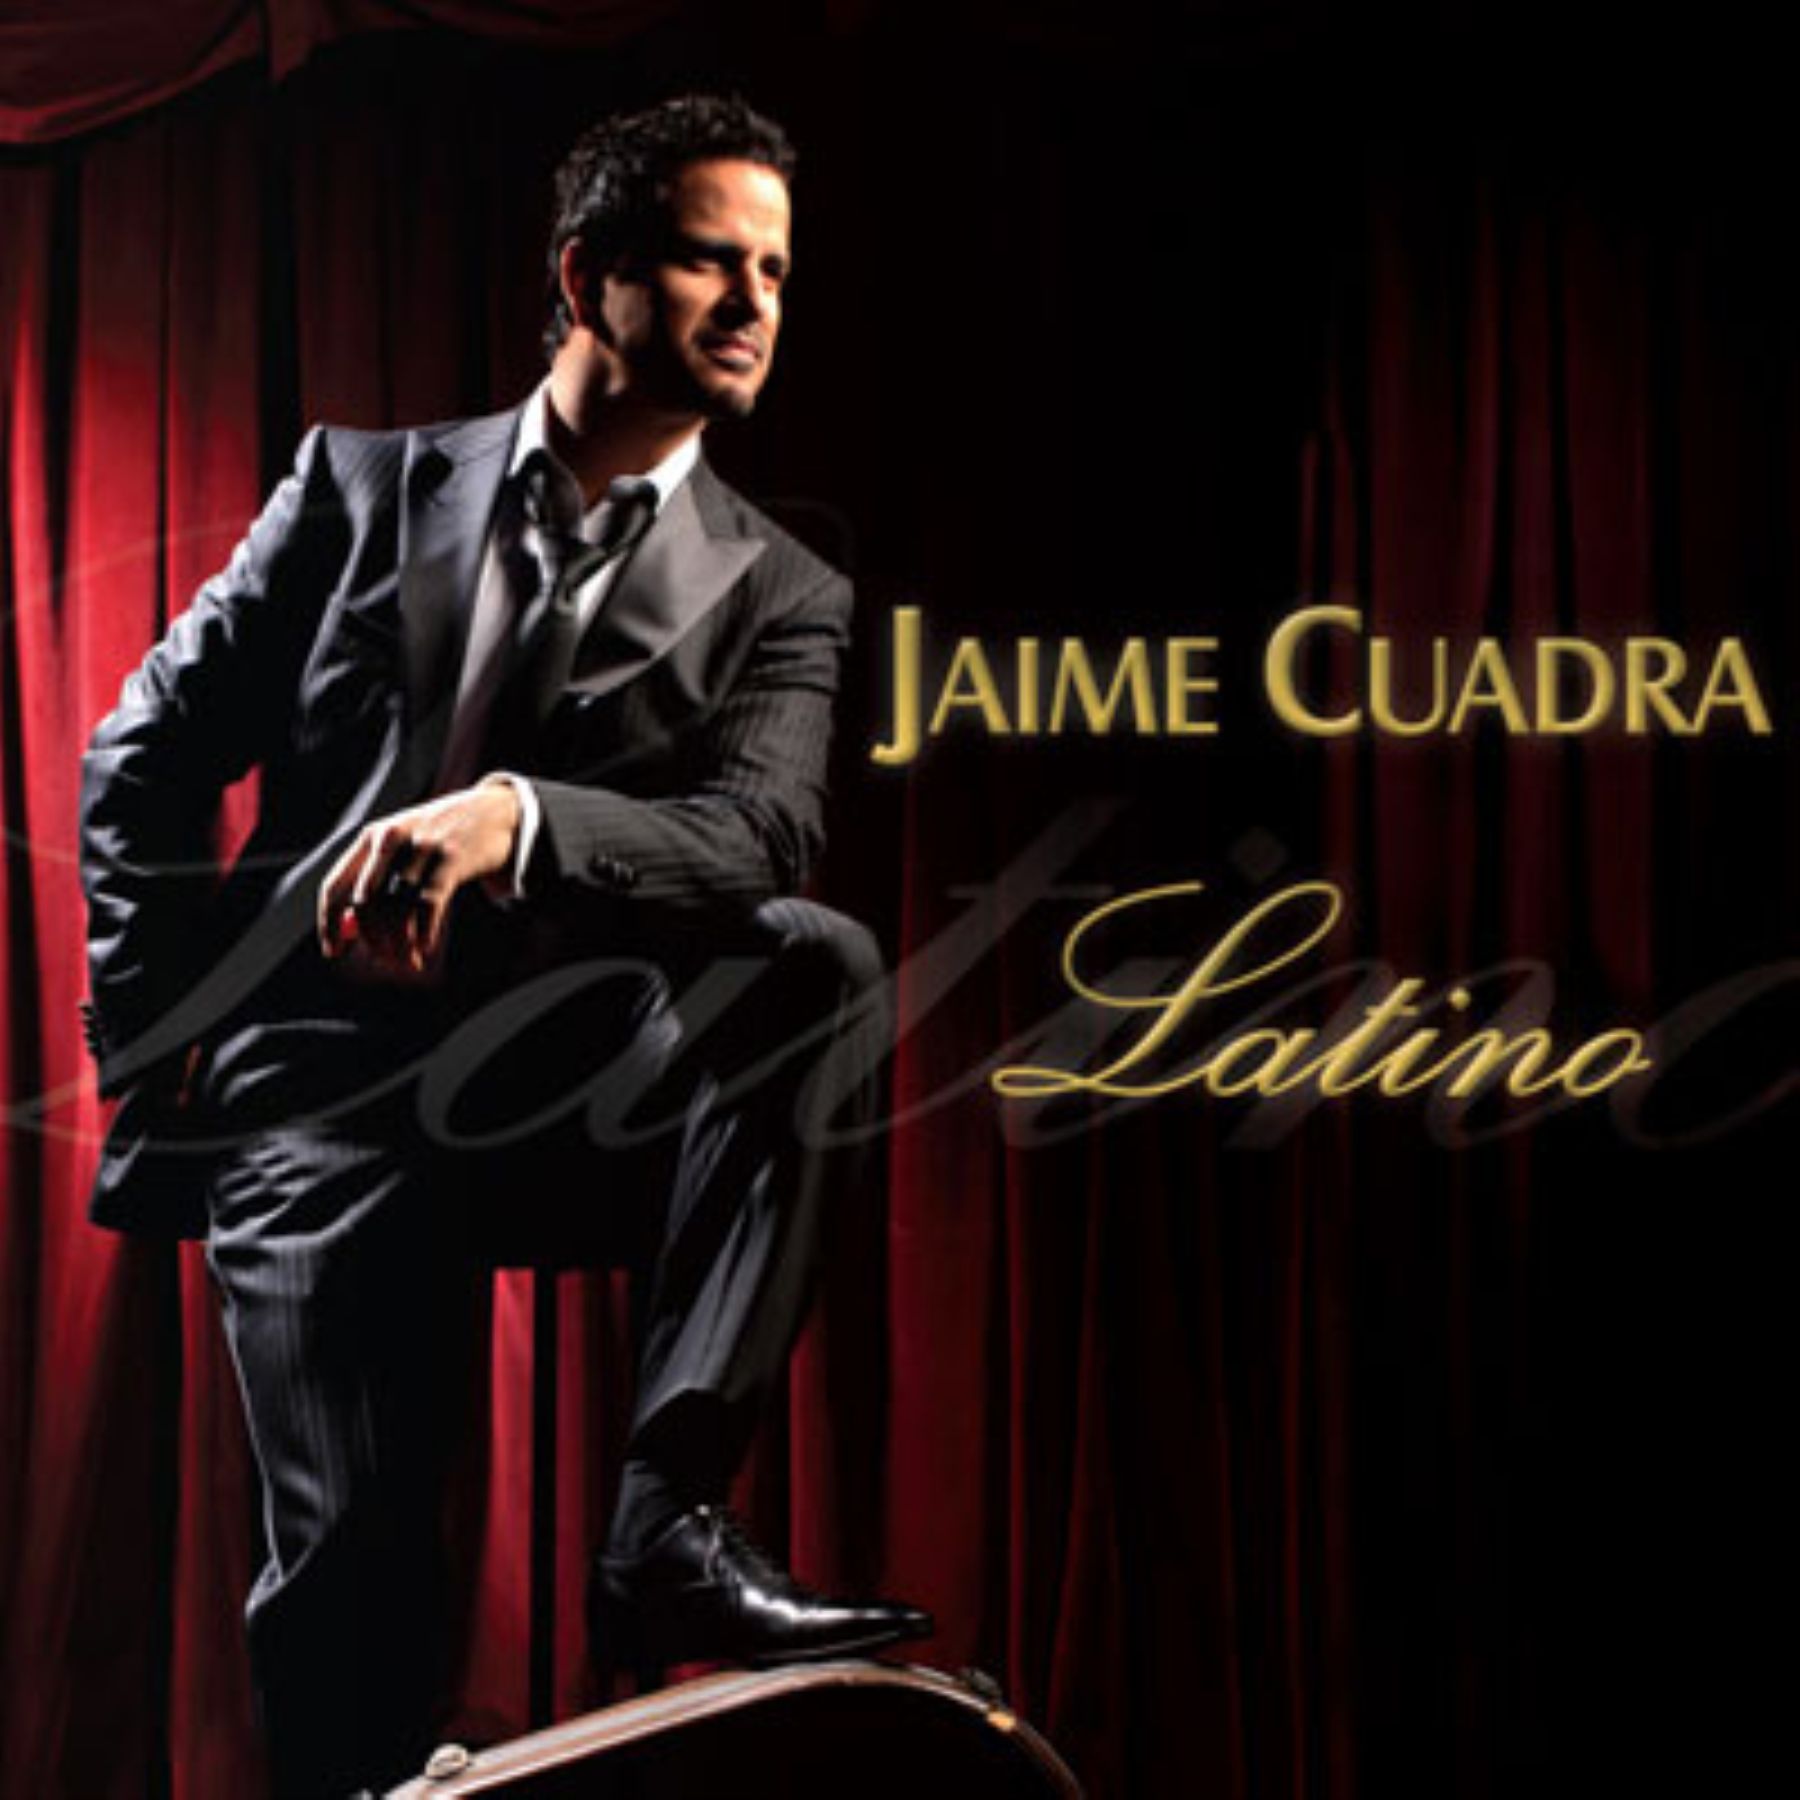 Jaime Cuadra presenta nuevo disco Latino